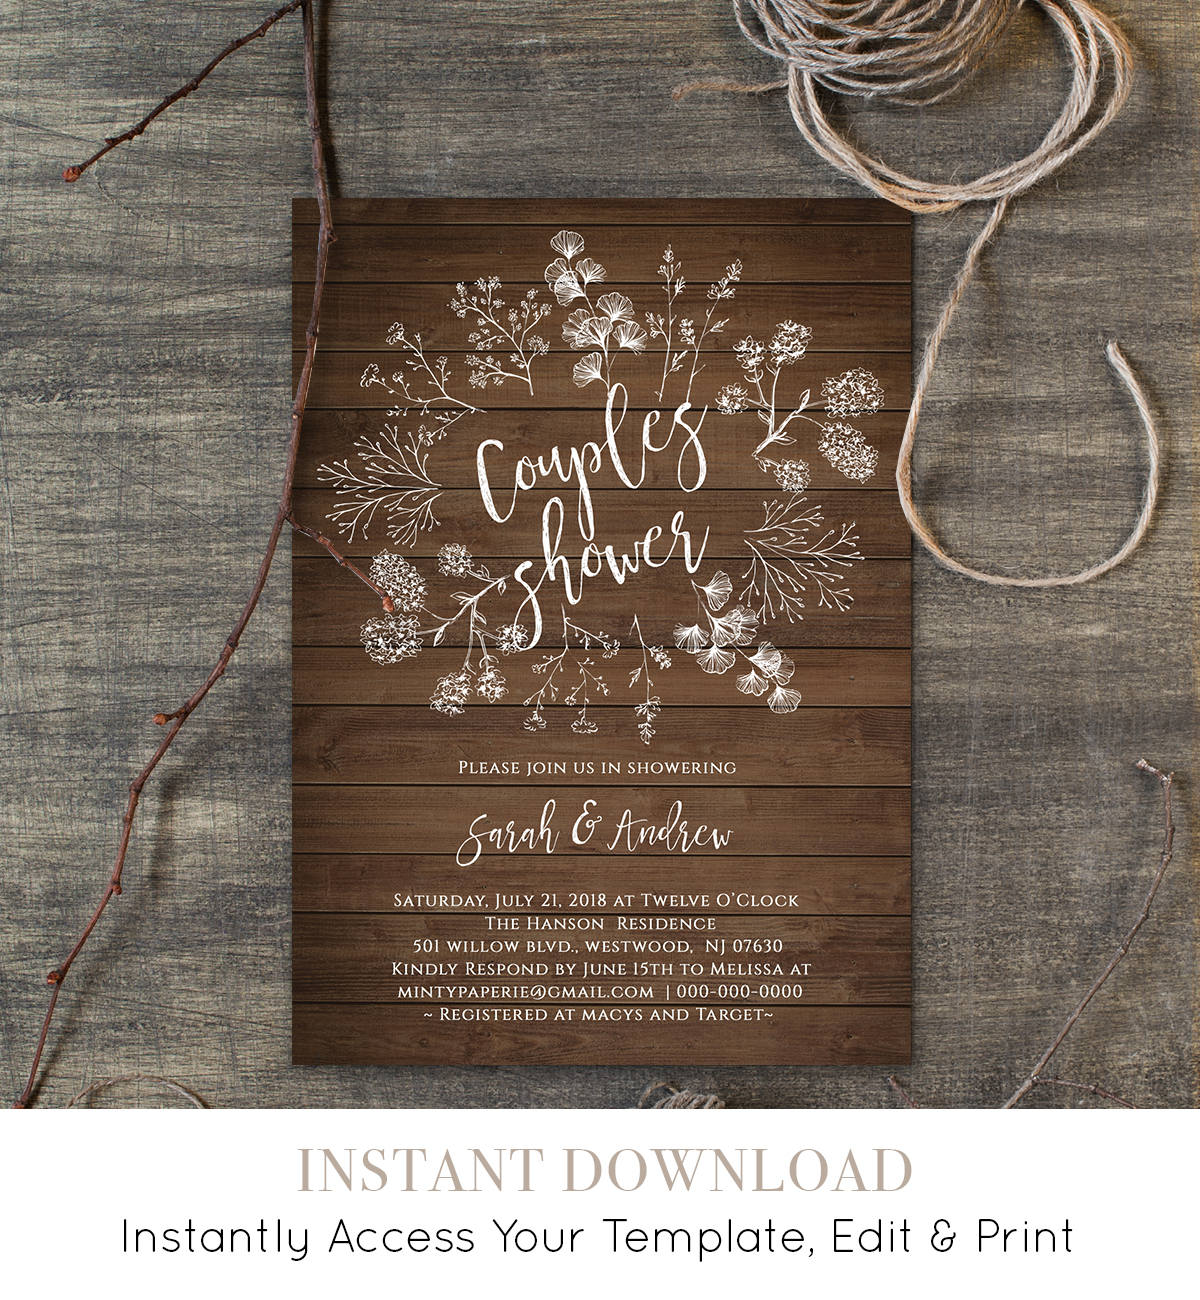 Couples Shower Invitation Template, Wedding Shower Printable, DIY Rustic Wood Wreath Bridal